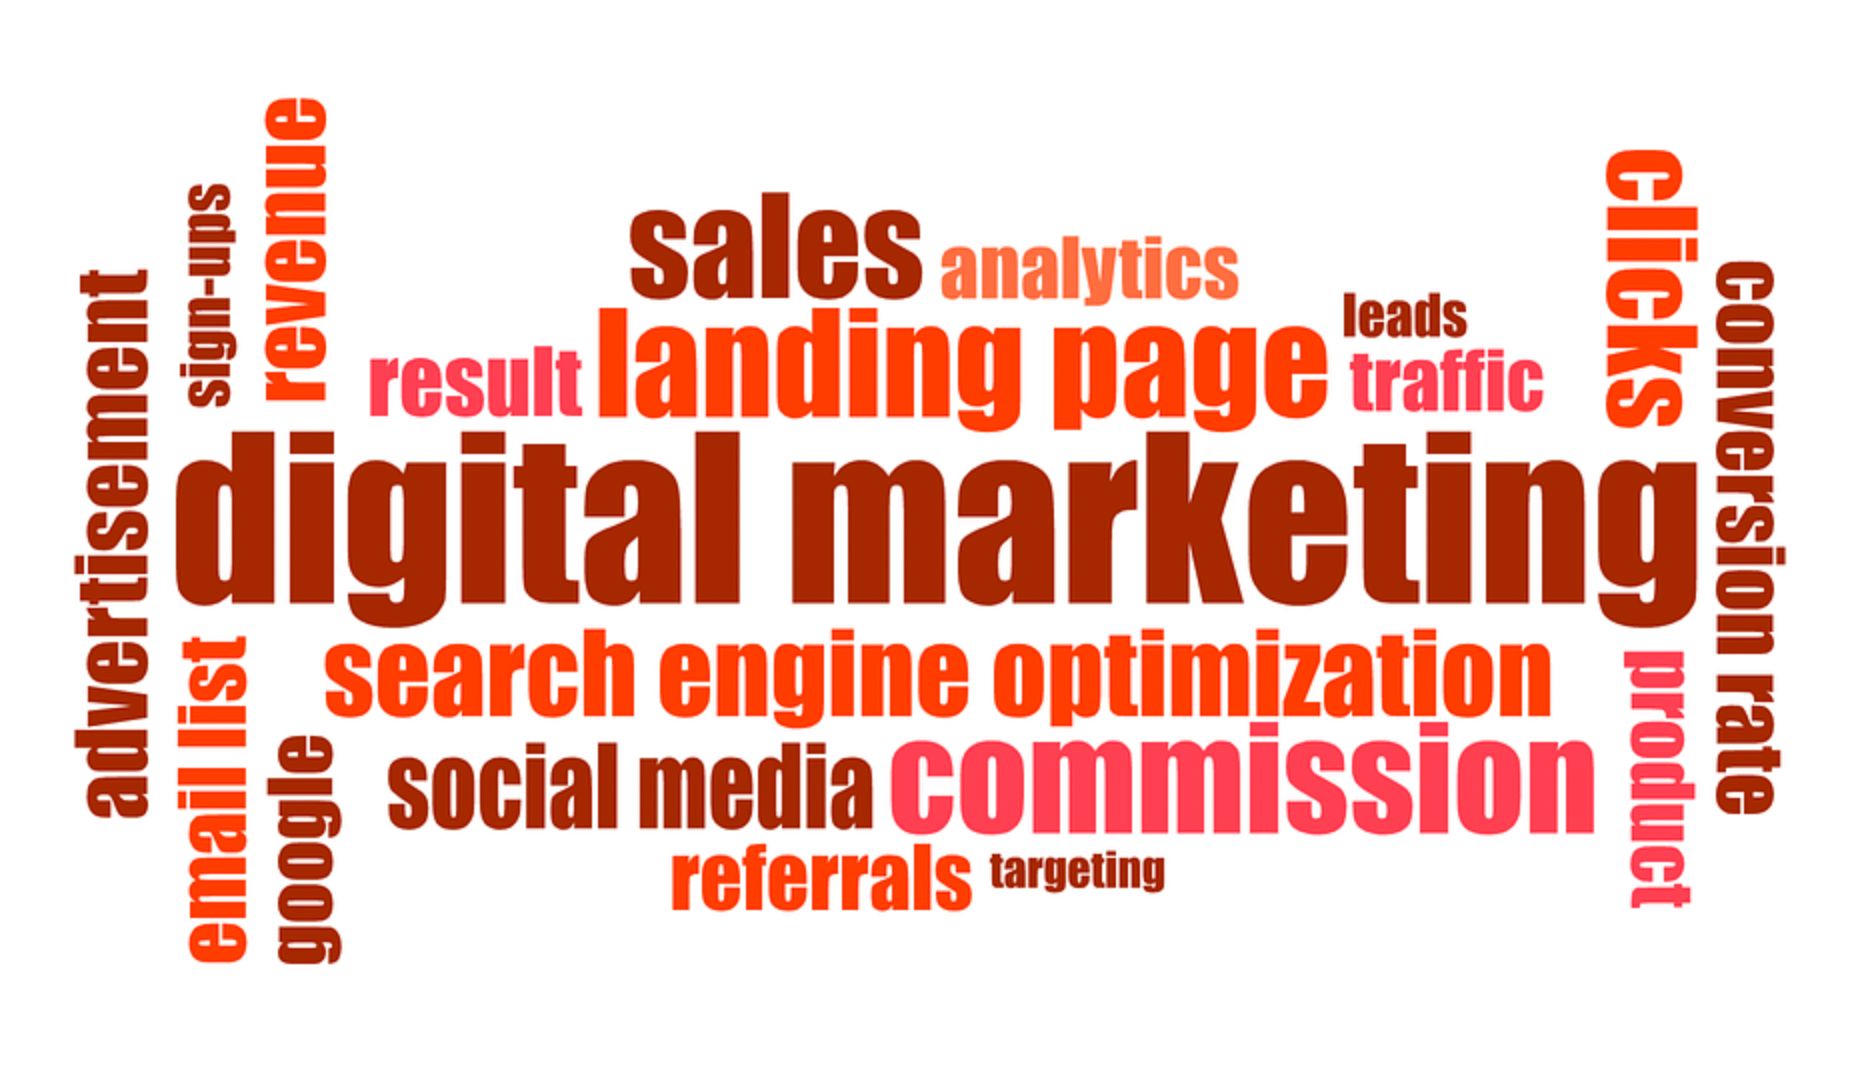 Digital marketing. Sales and marketing notices.